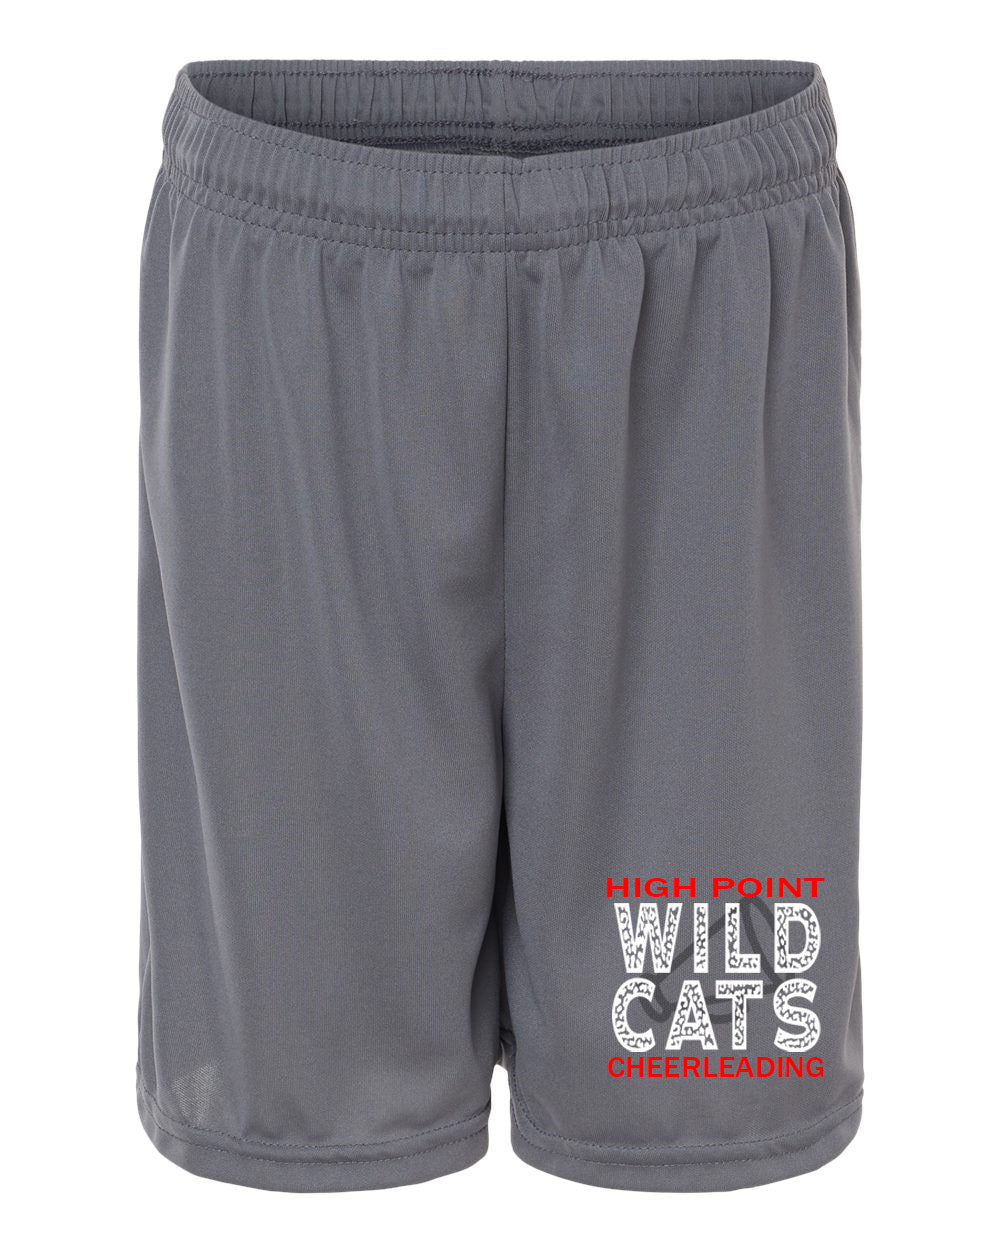 Wildcats Cheer Design 1 Performance Shorts